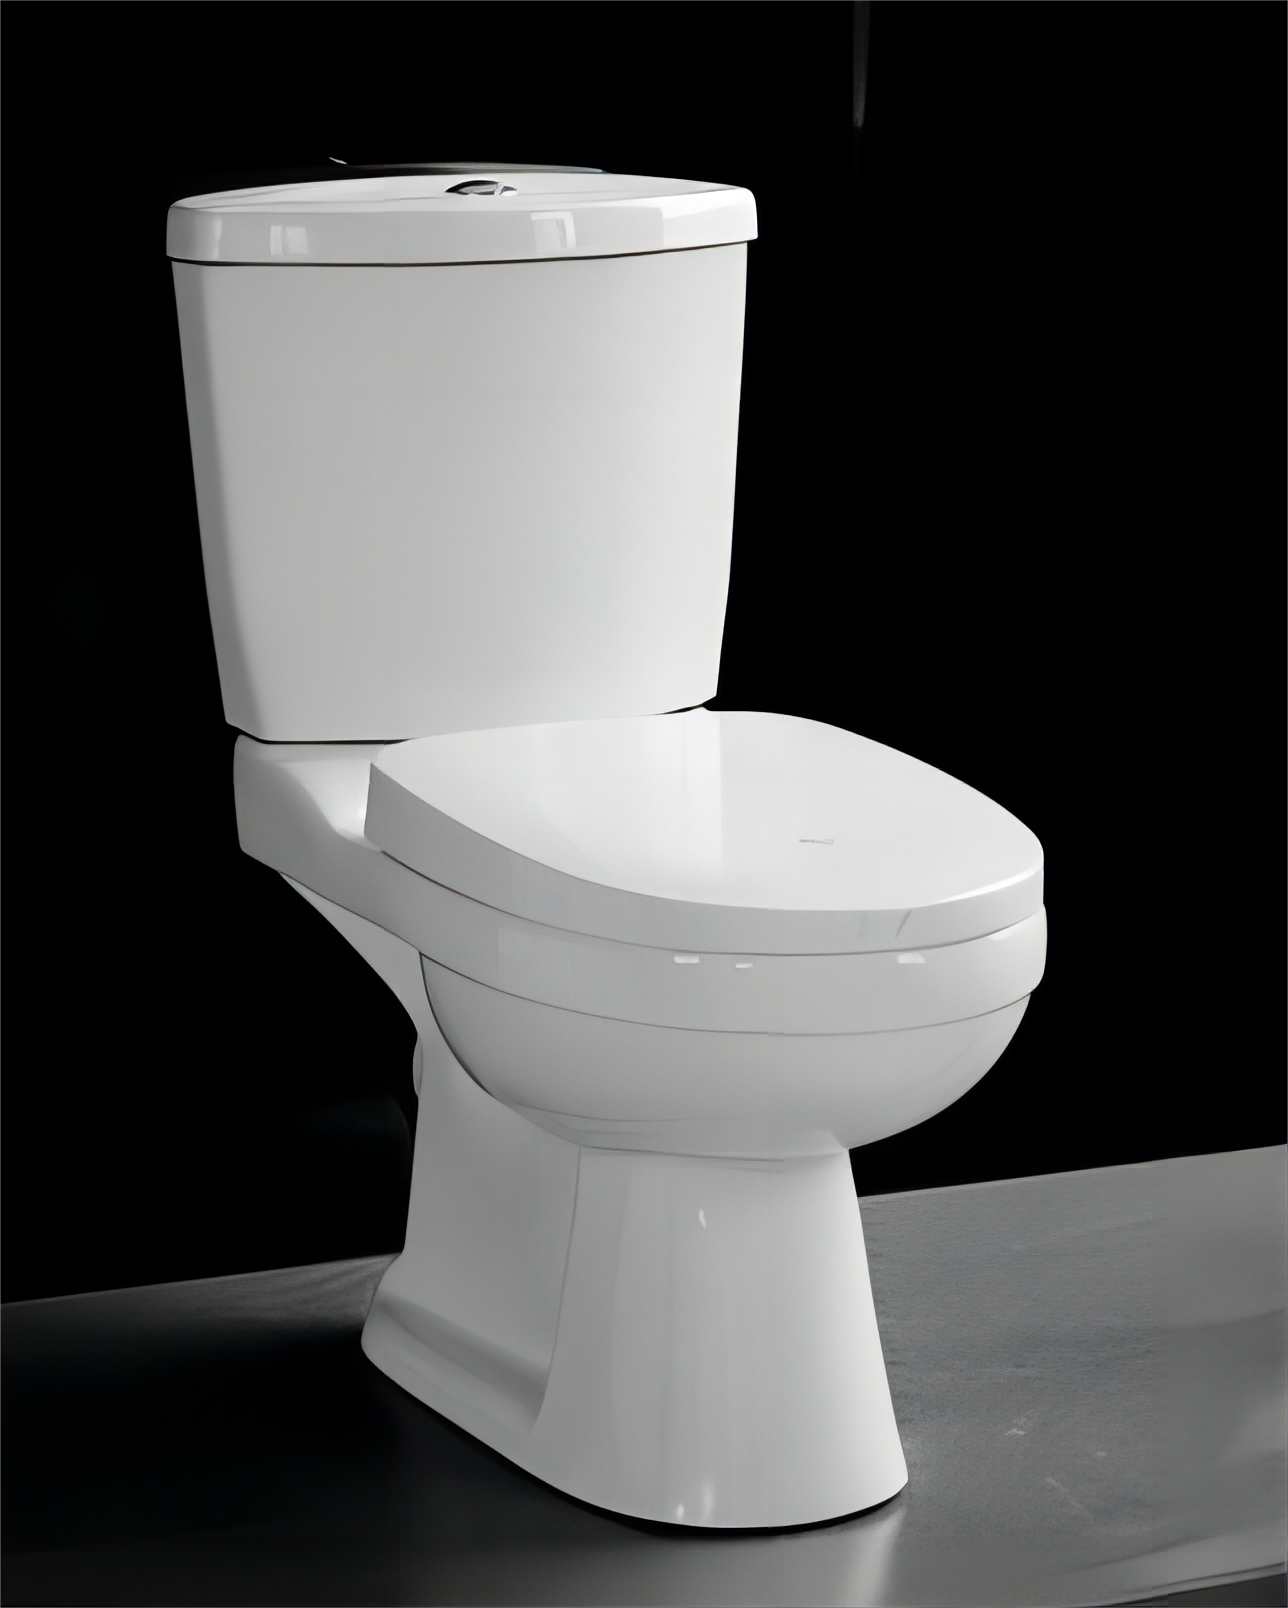 he aha ka halepakuka akamai Self Clean Designs Modern Electronic Inteligent Toilet